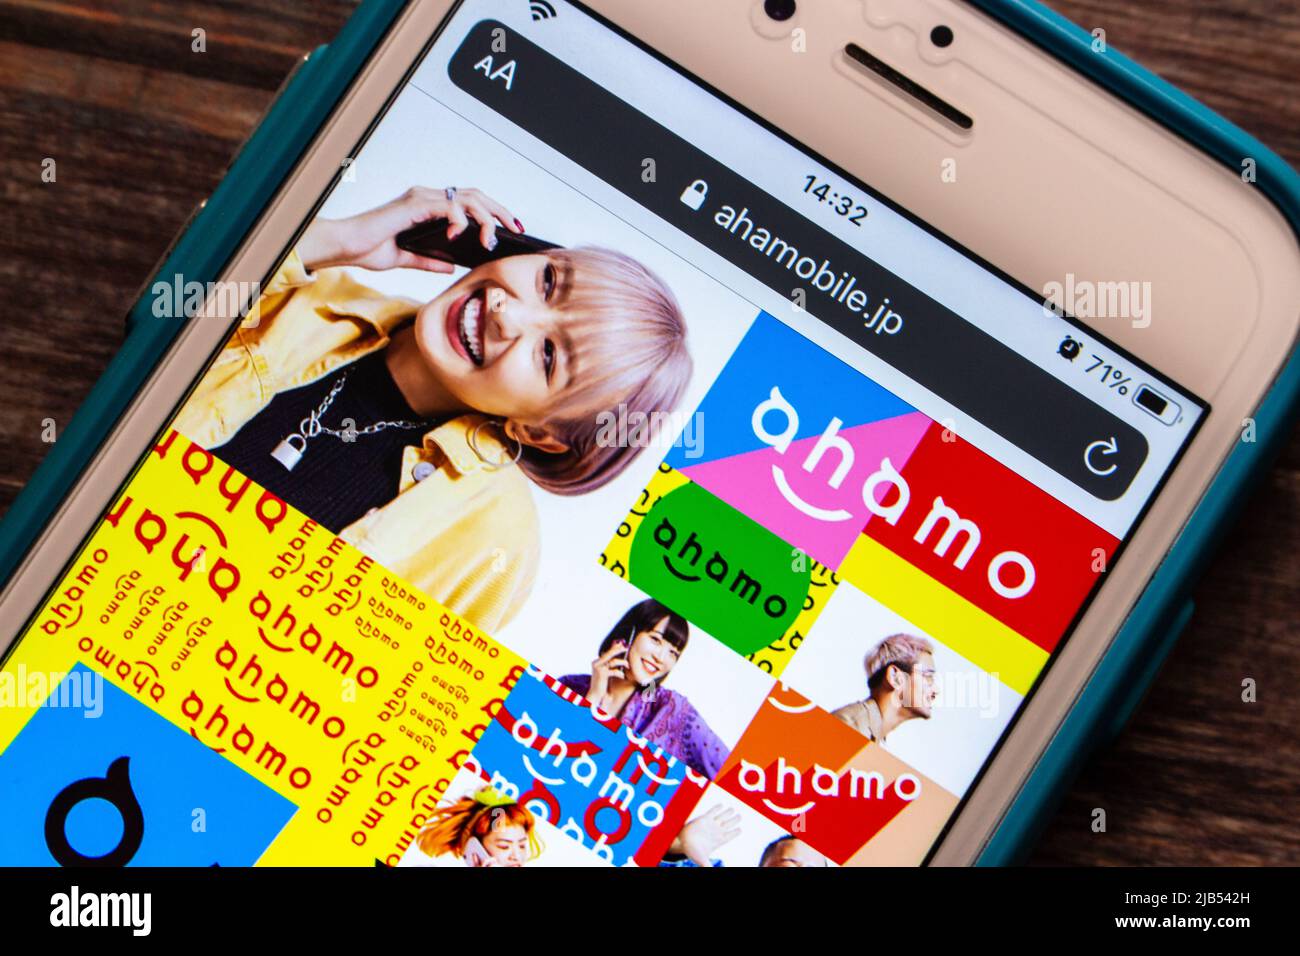 Kumamoto, JAPAN - Dec 4 2020 : Logo of Ahamo in its website on iPhone. Ahamo is the new plan of 20 gigabyte monthly plan for 2980 yen by NTT docomo Stock Photo